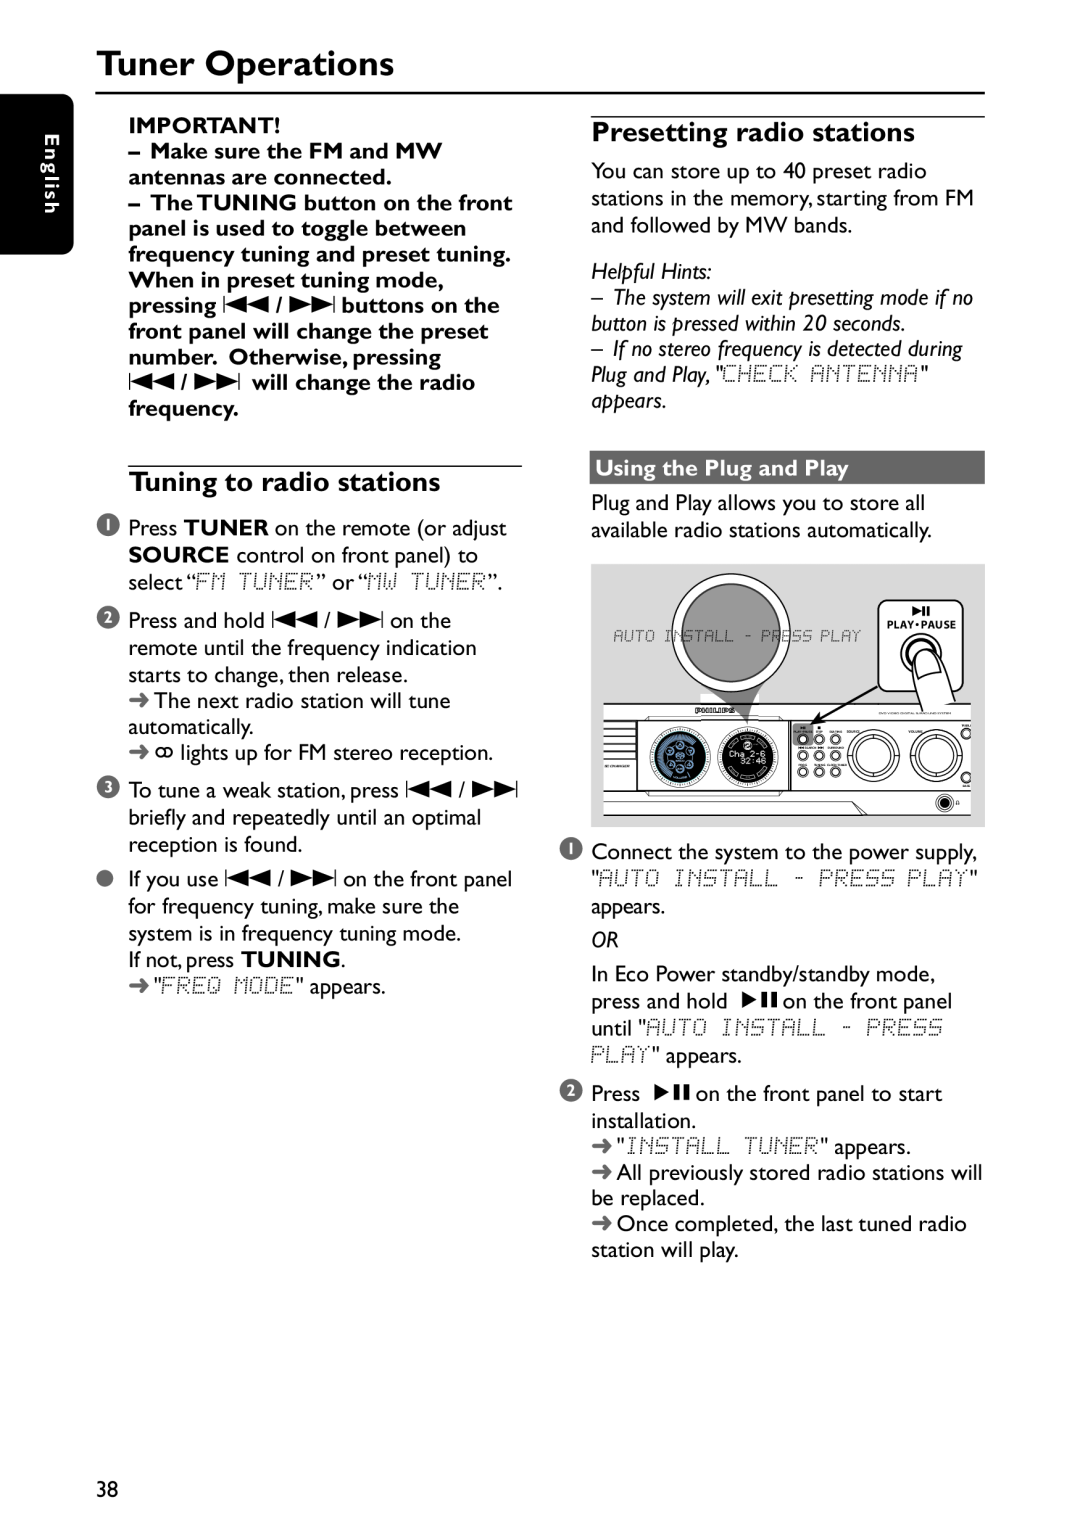 Philips MX5800SA/22S manual Tuner Operations, Tuning to radio stations, Presetting radio stations, Helpful Hints 